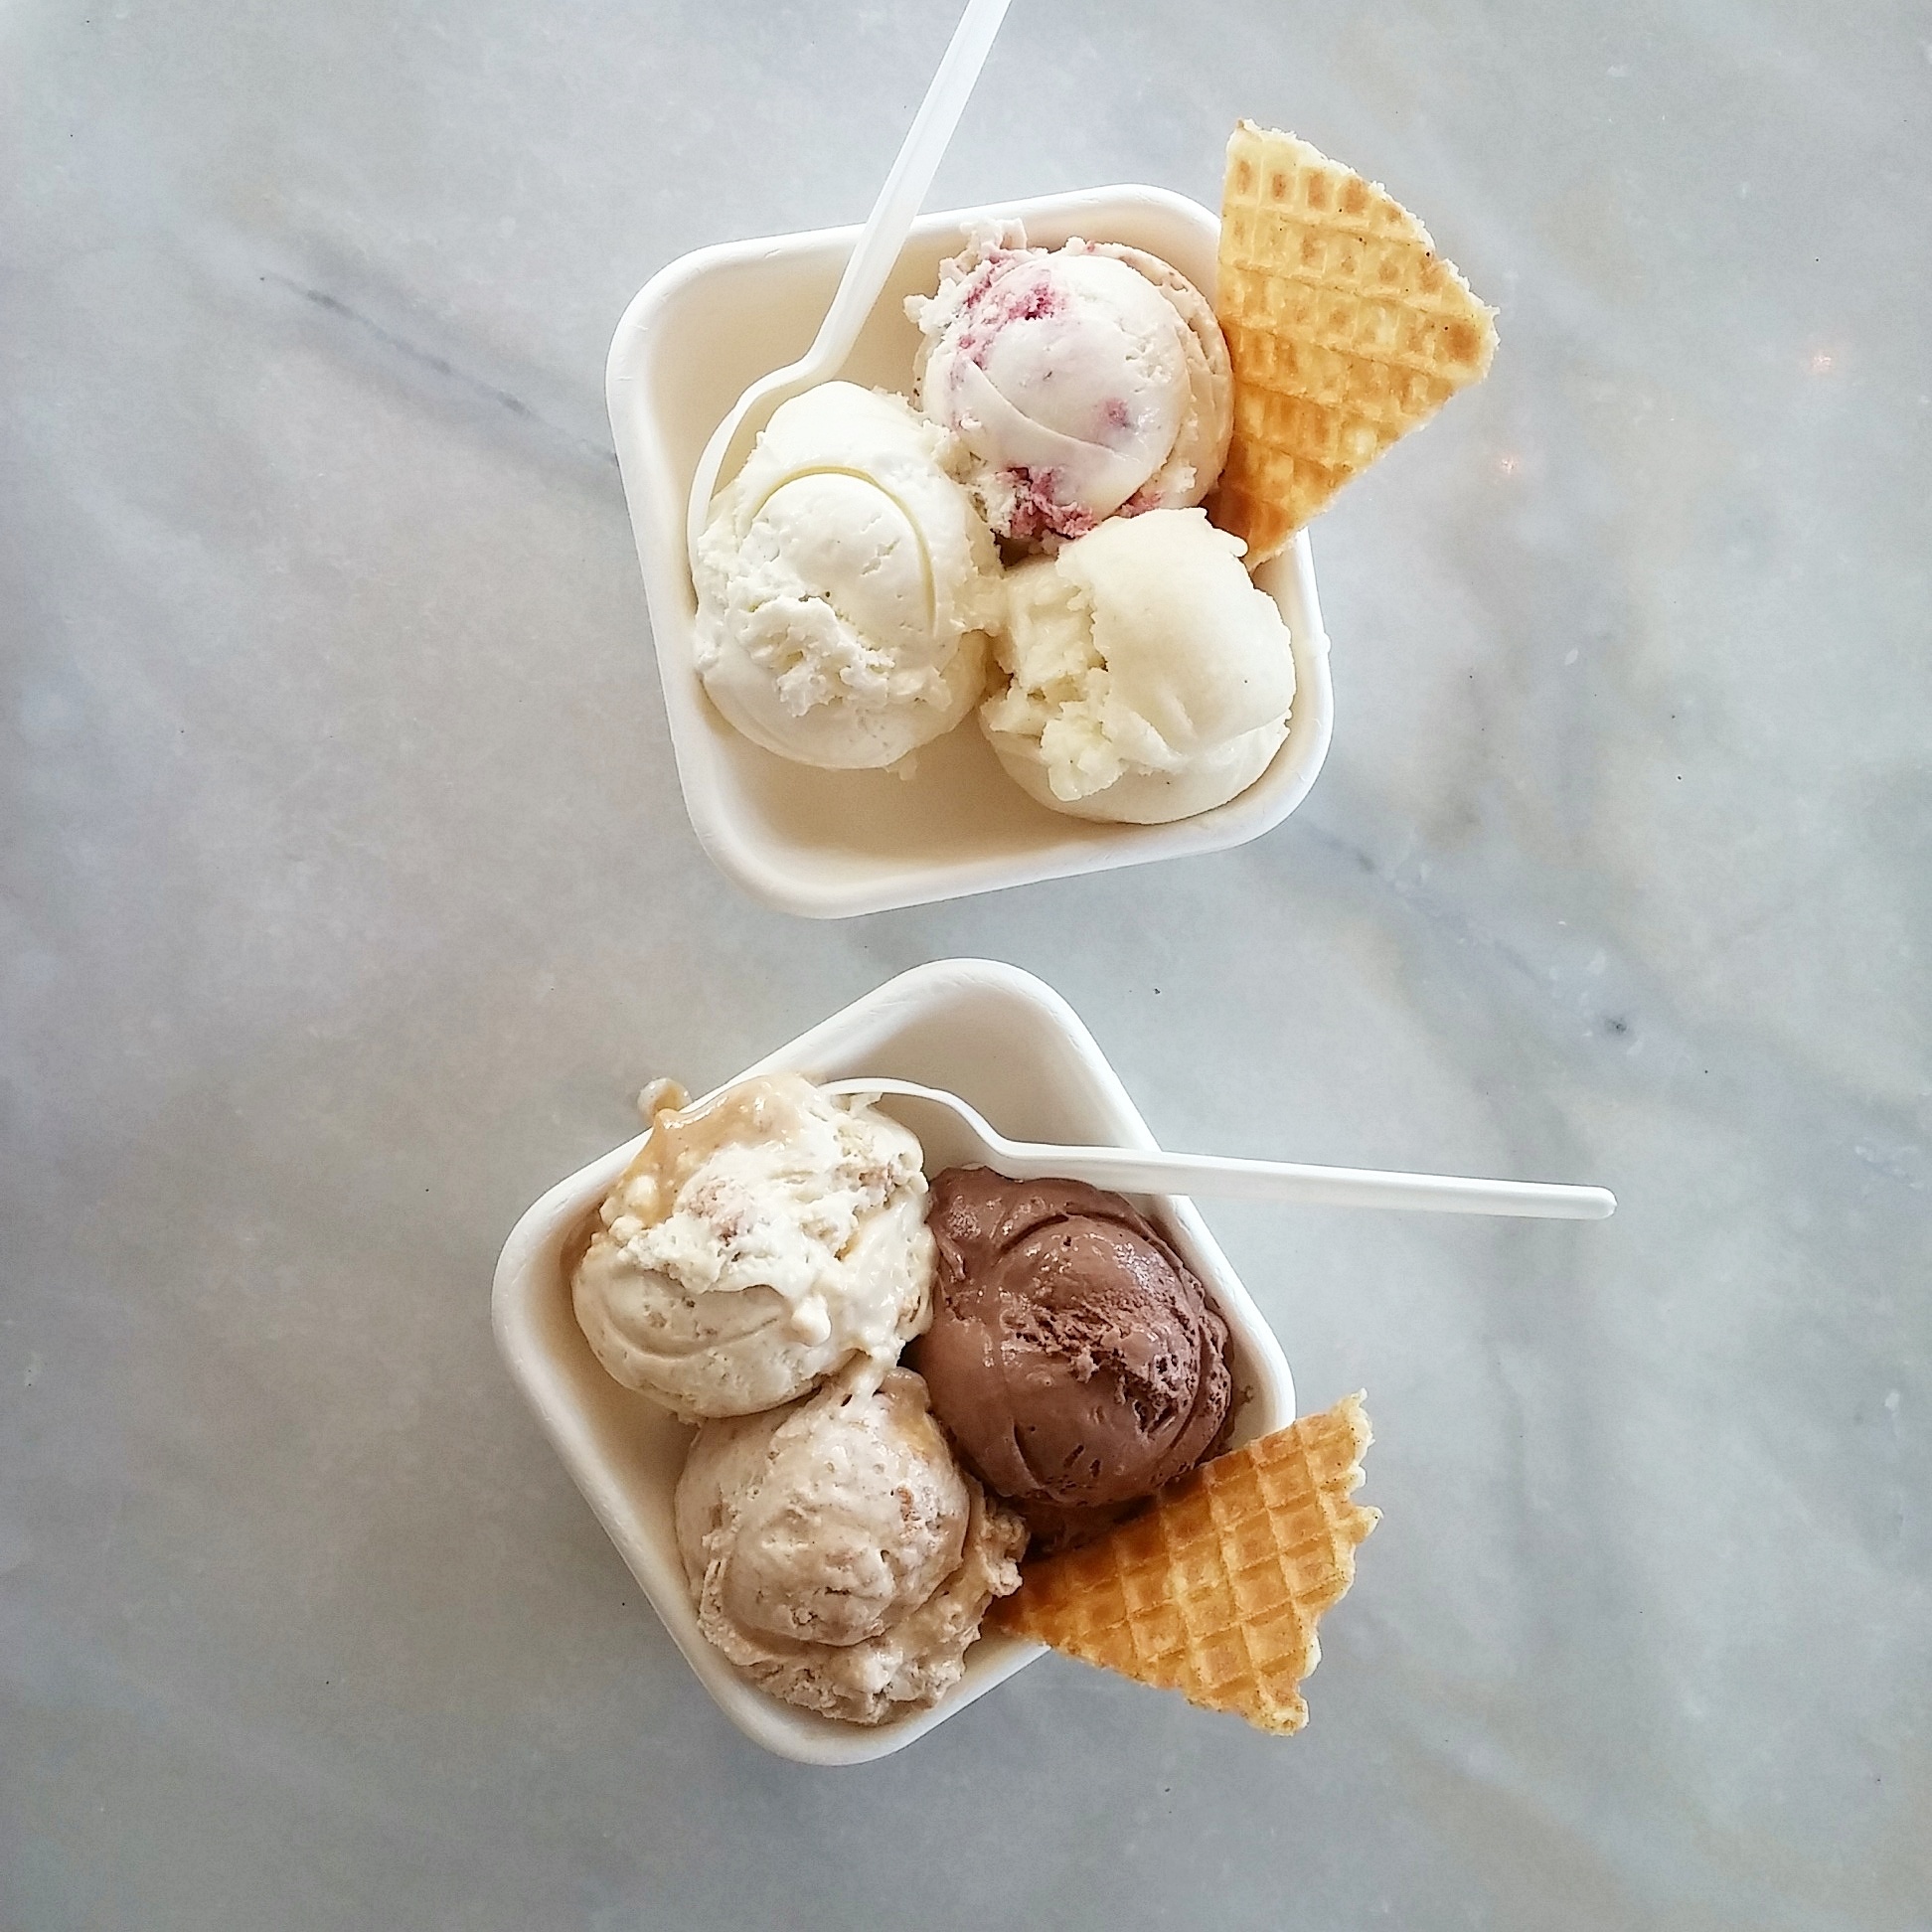 6 flavors/scoops at Jeni's Splendid Ice Creams